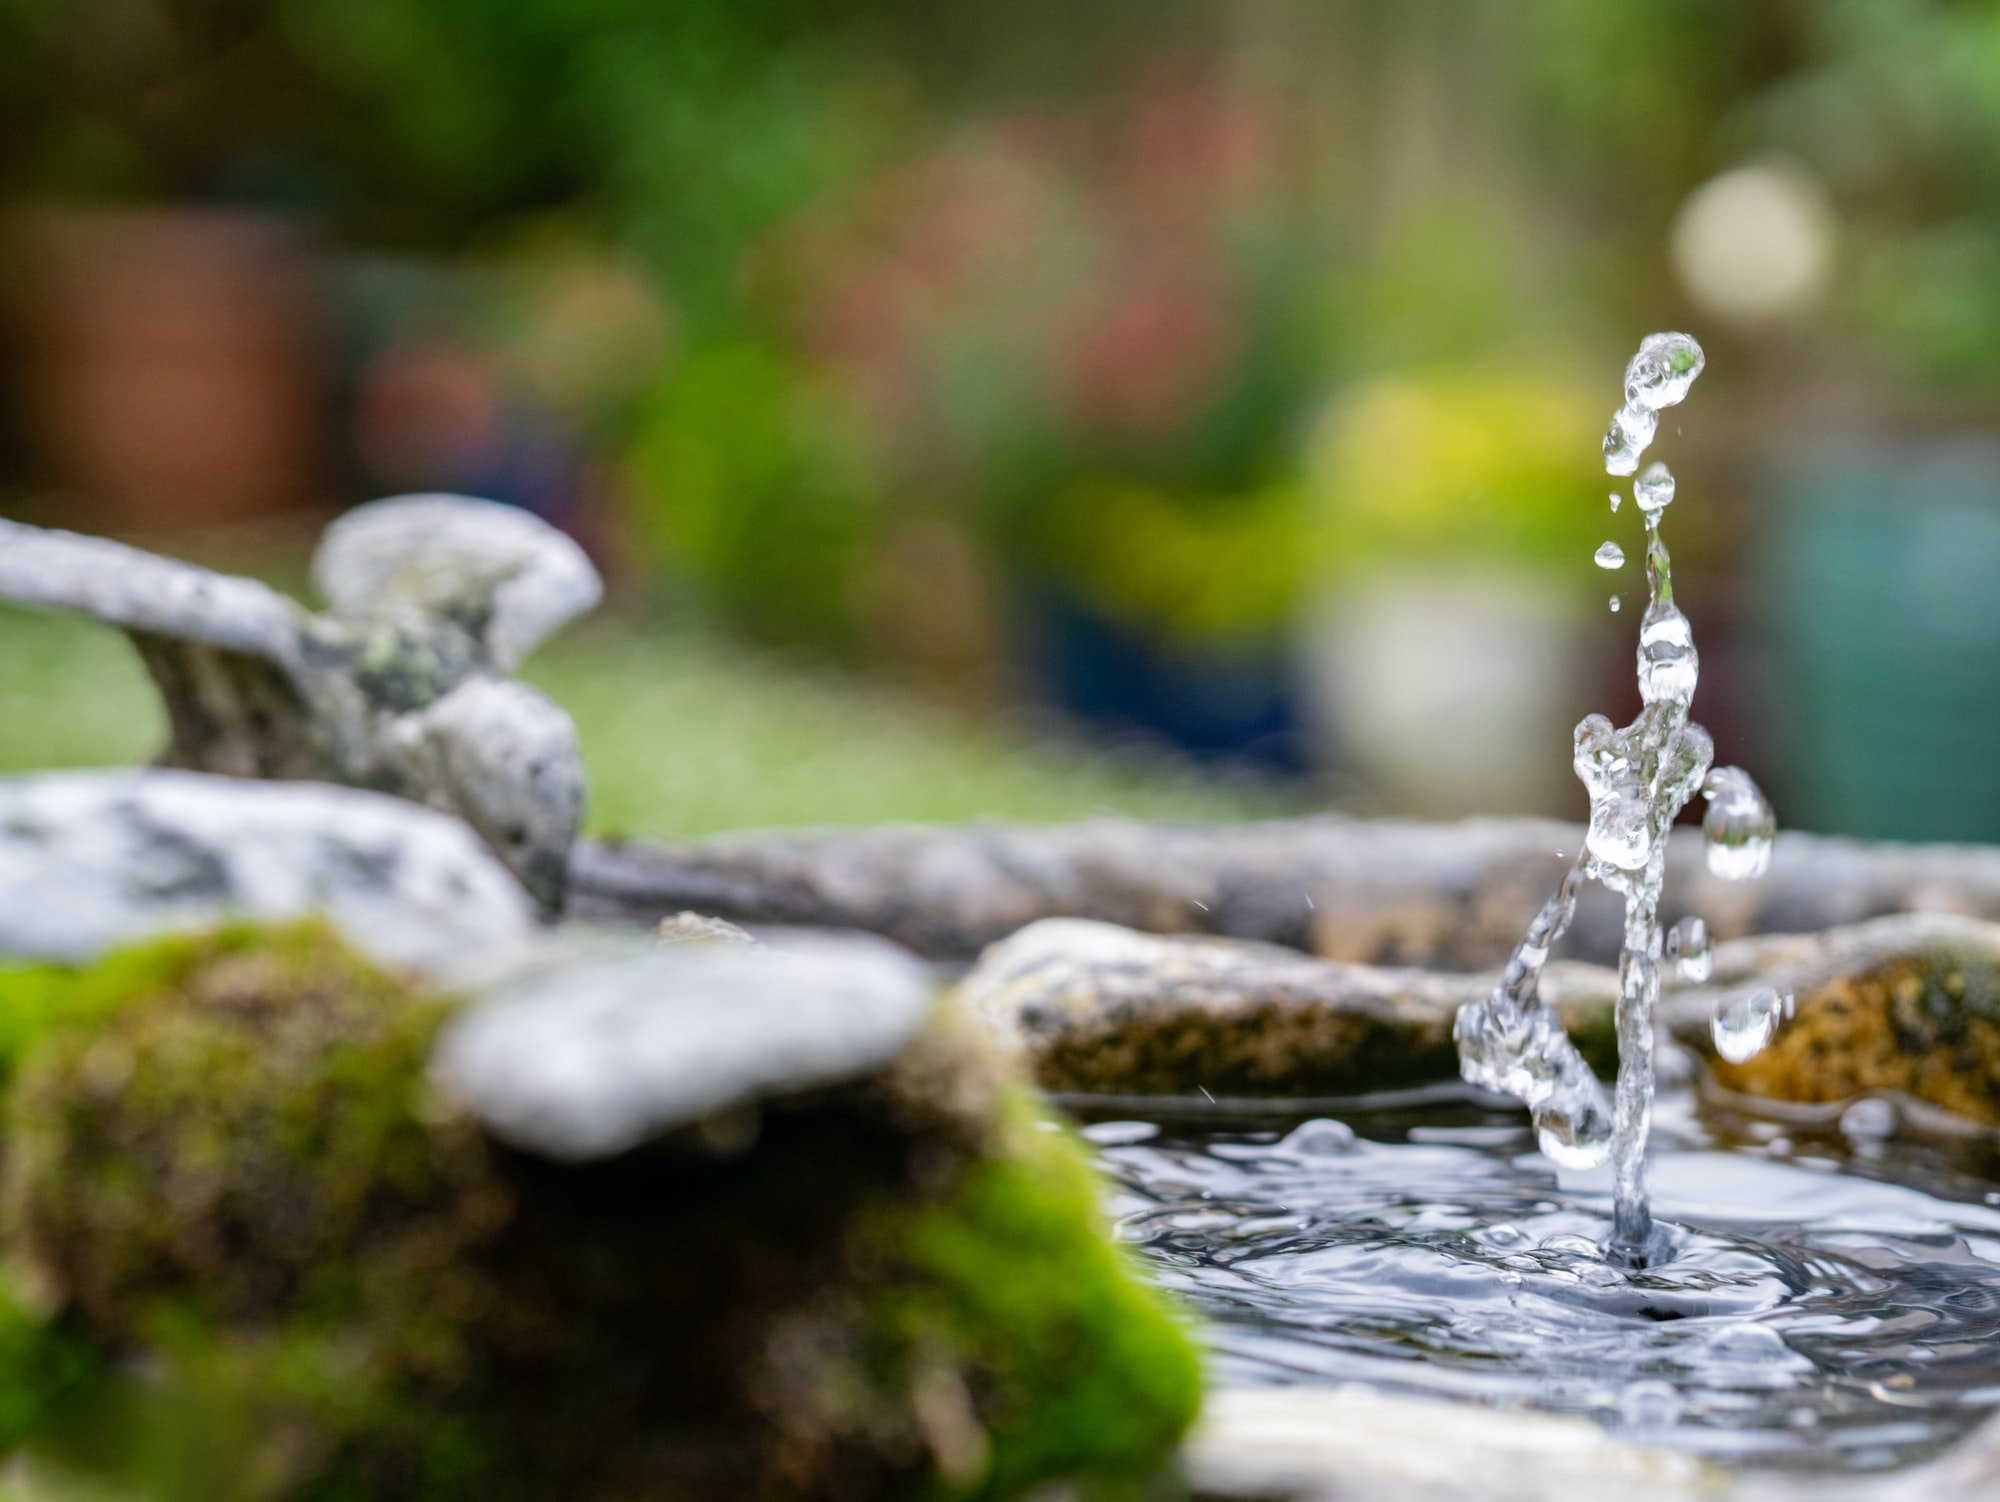 Outdoor Water Fountains BenefitsThe Benefits of Outdoor Water Fountains